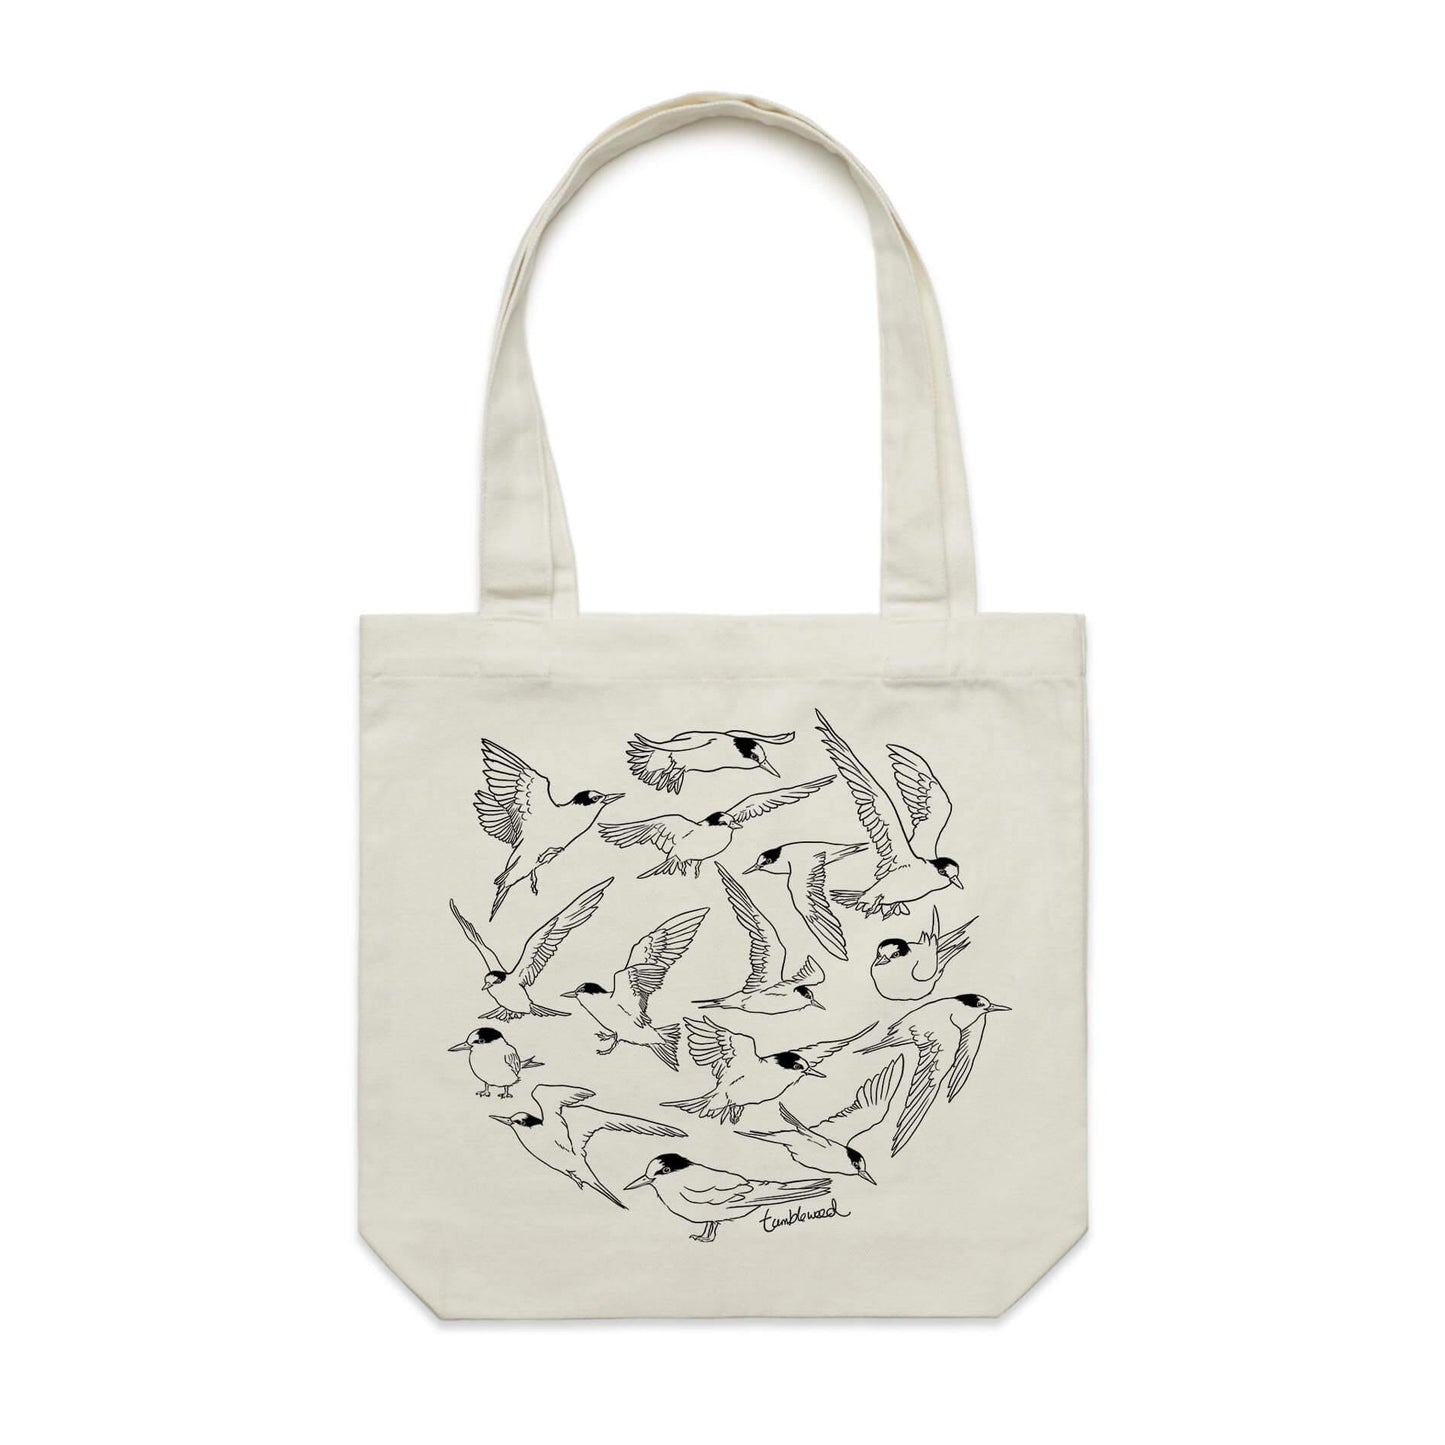 Cotton canvas tote bag with a screen printed Fairy Tern/Tara-iti design.